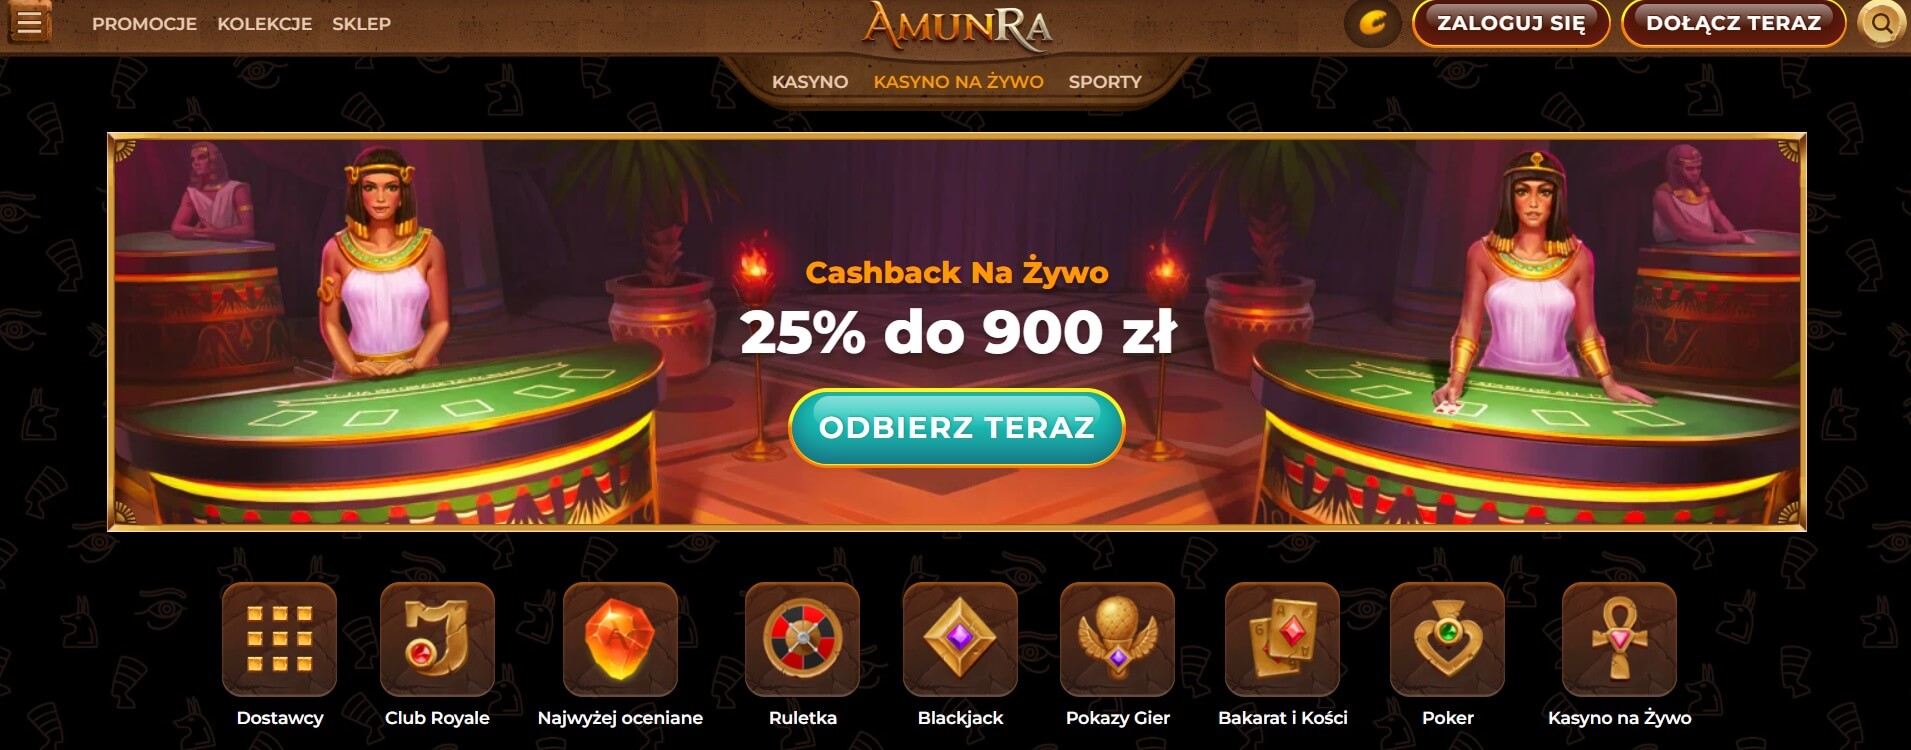 Amunra Live Casino screenshot screenshot